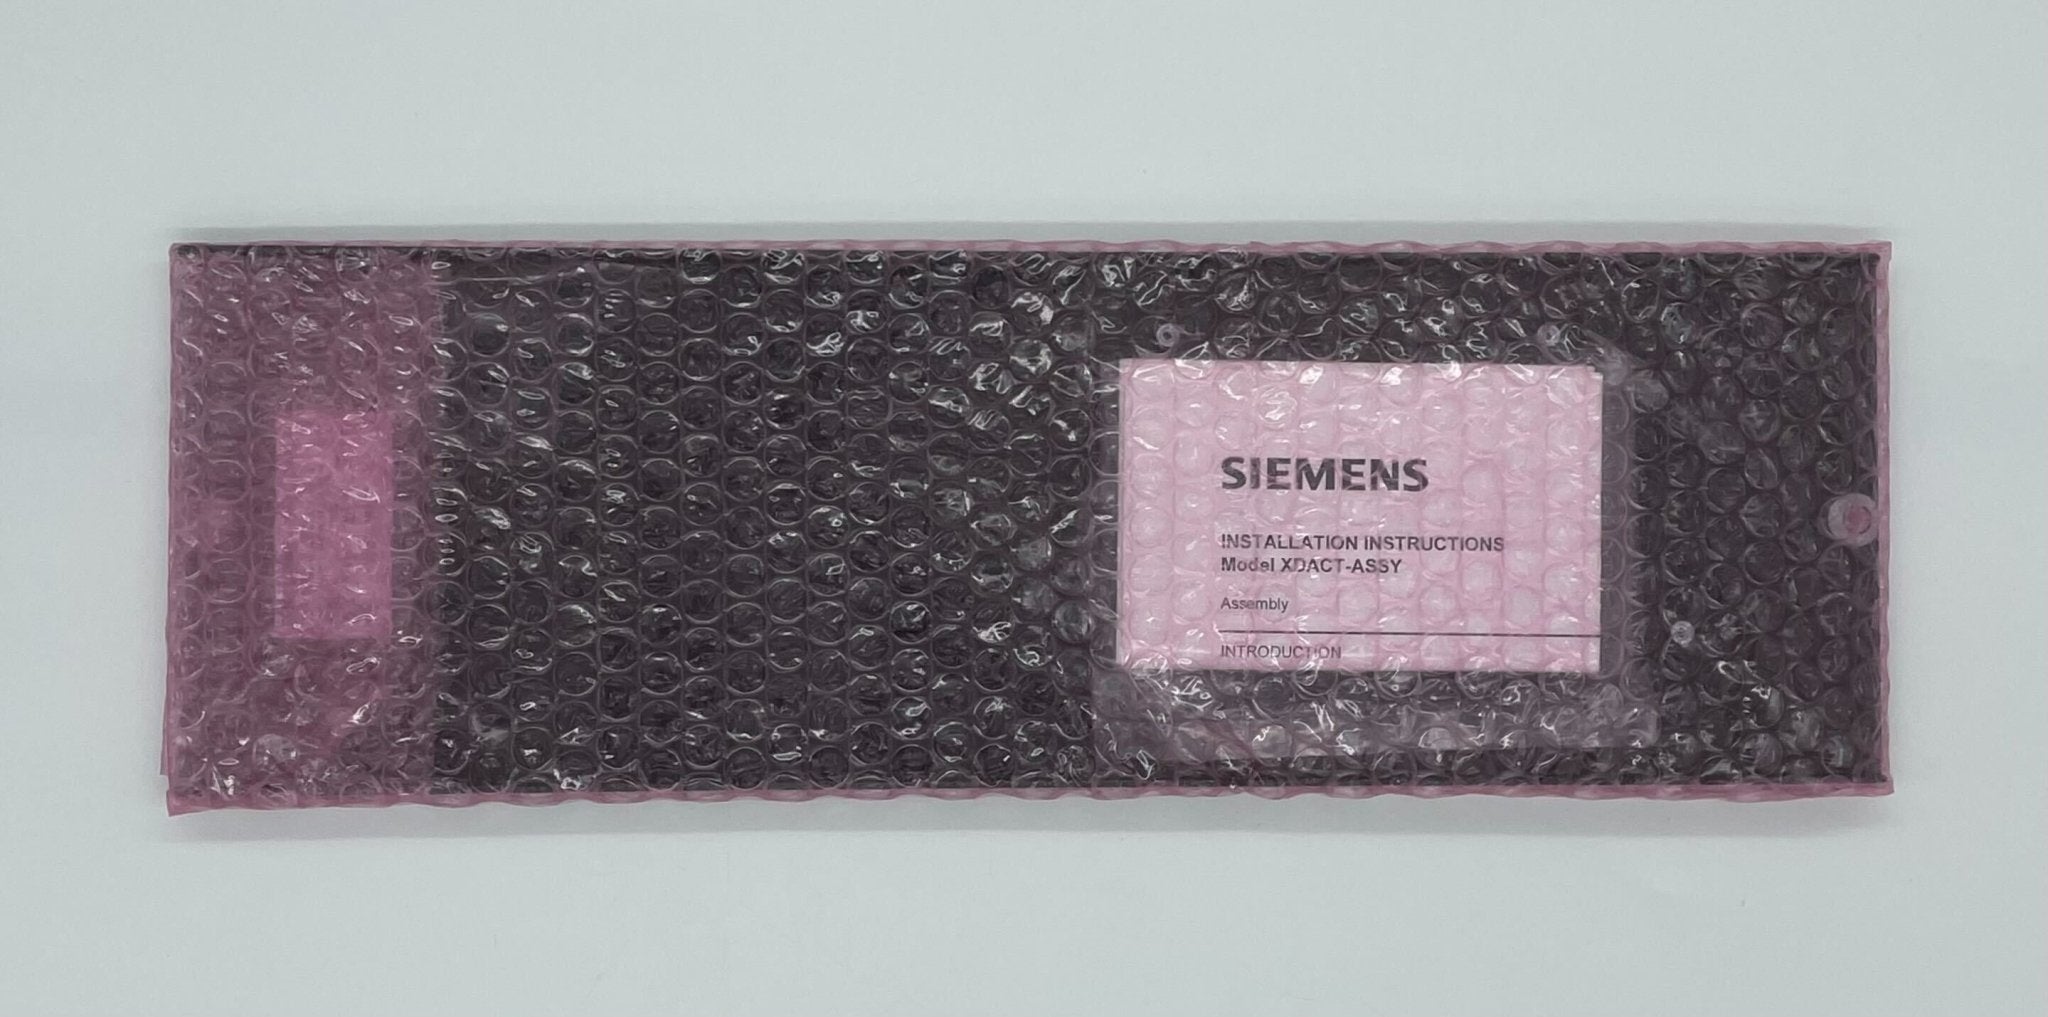 Siemens XDACT-ASSY - The Fire Alarm Supplier